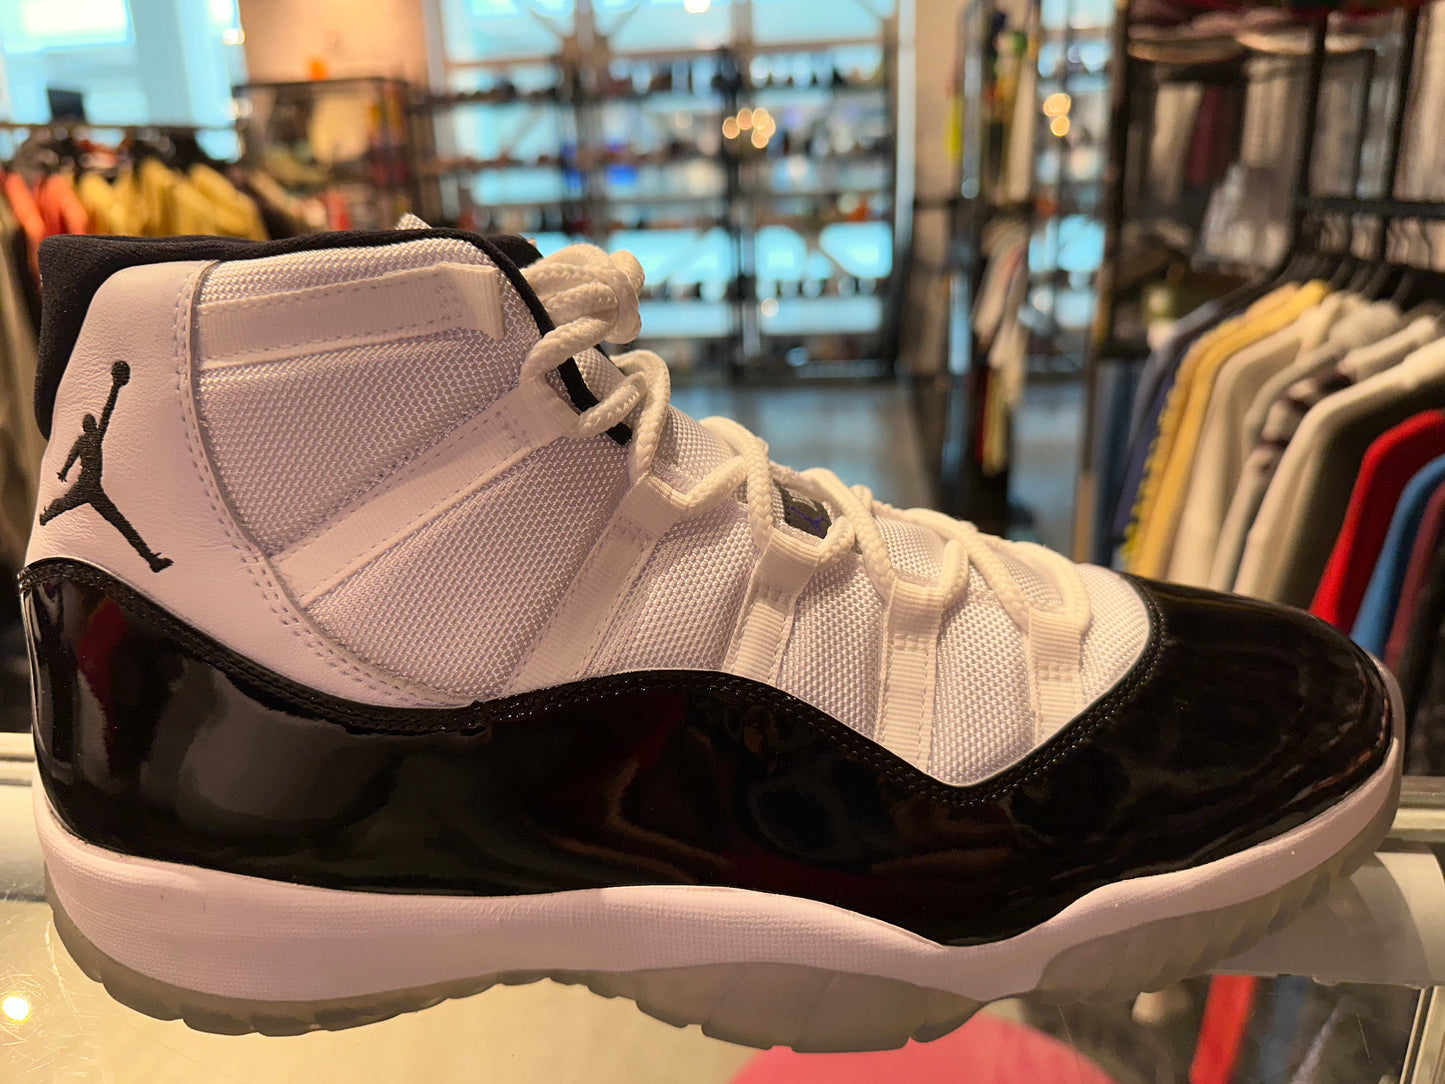 Size 14 Air Jordan 11 “Concord” Brand New (Mall)